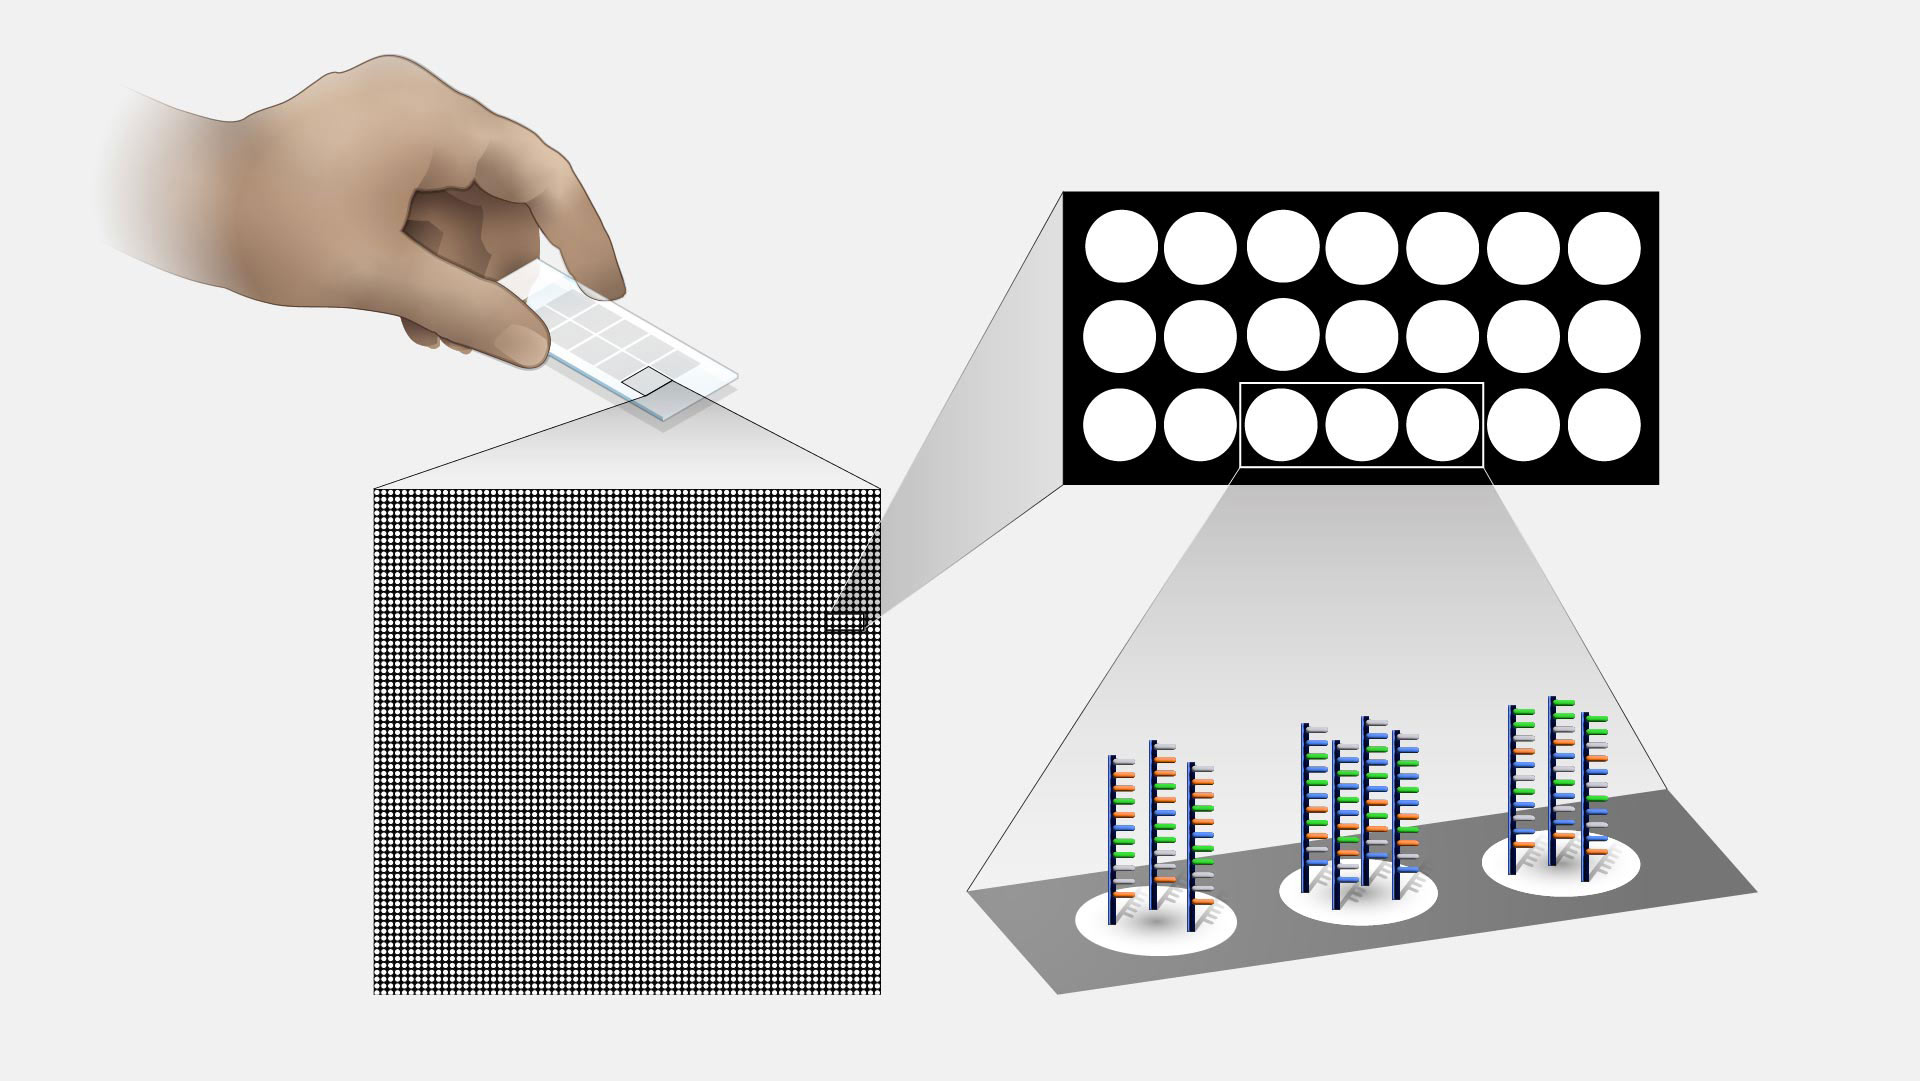  Microarray Technology